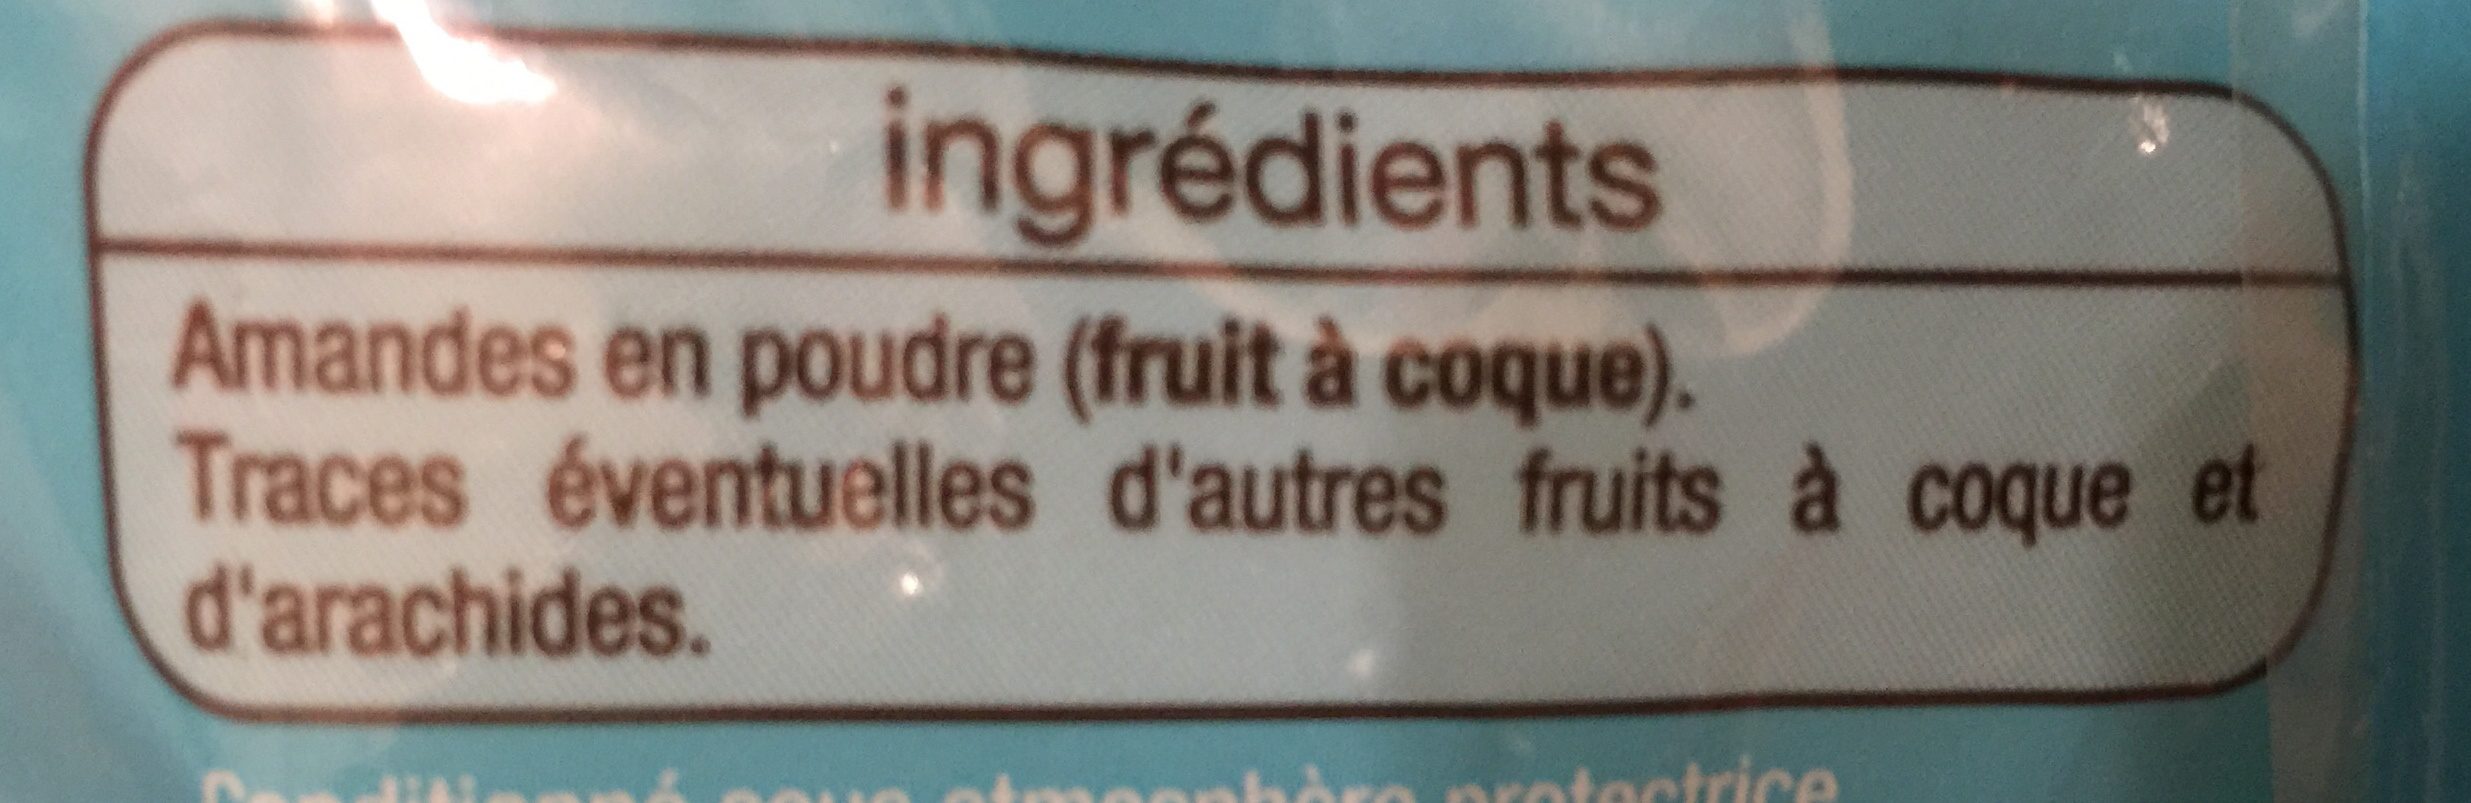 Amandes en poudre - Ingredients - fr